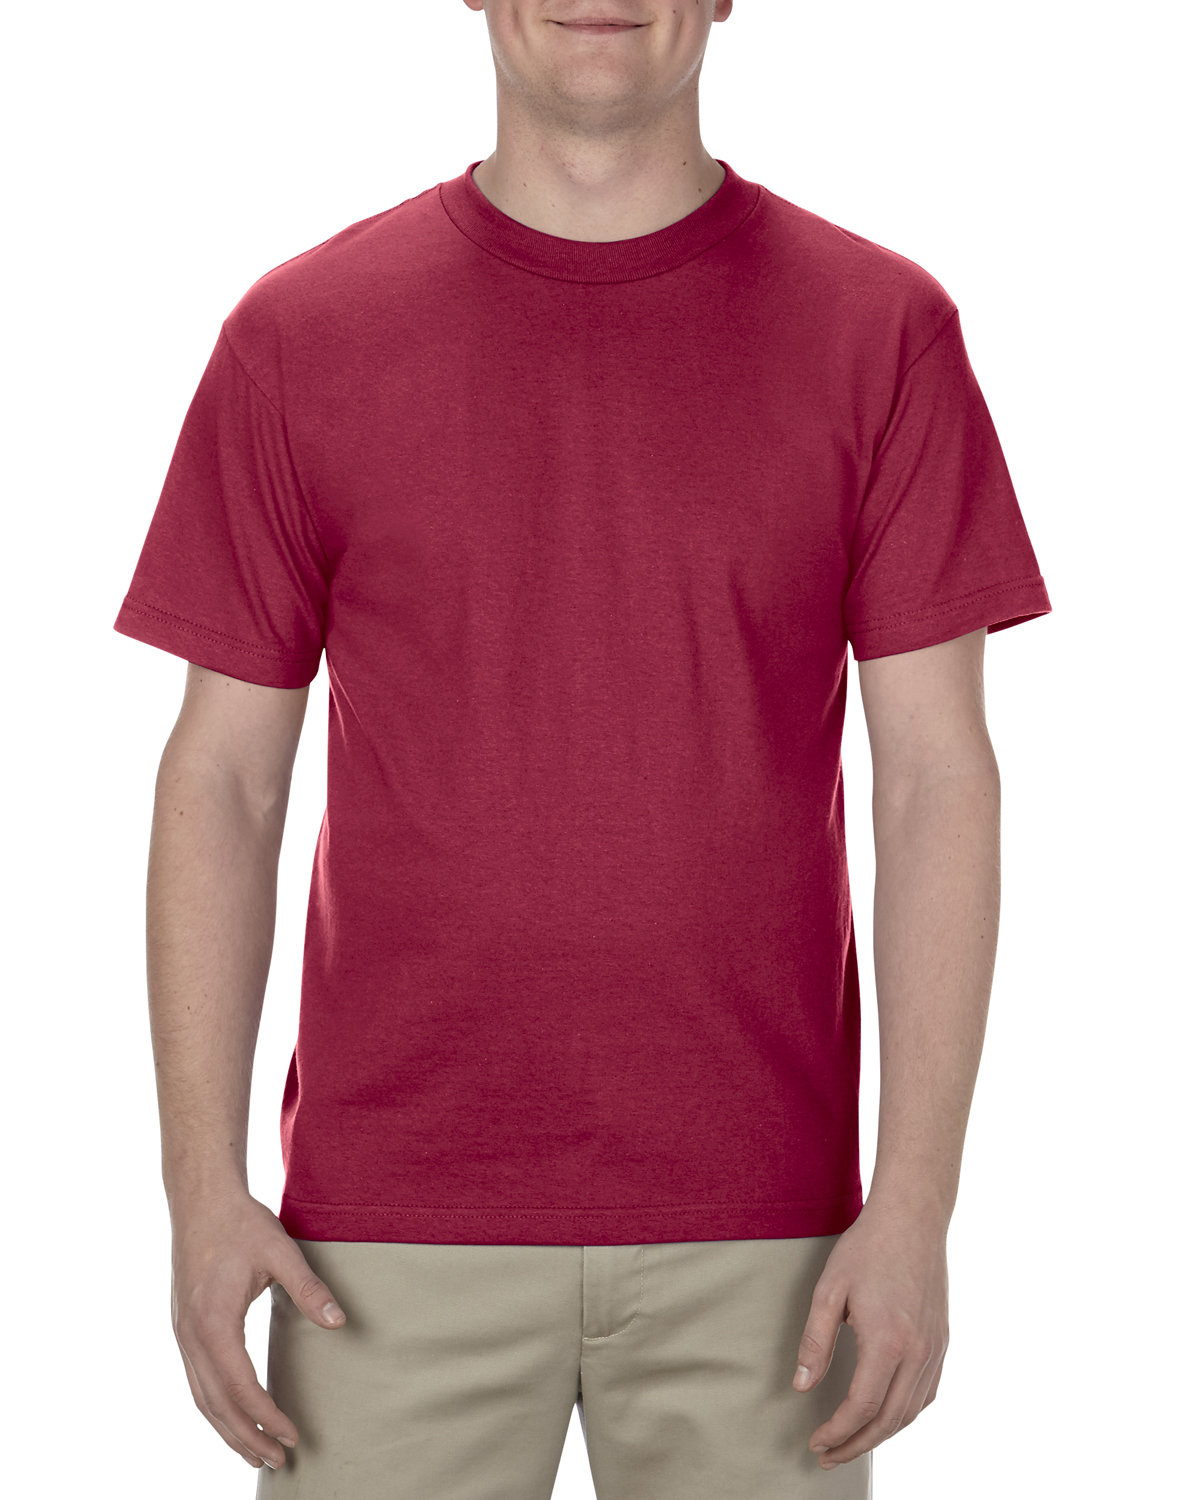 American Apparel Unisex Heavyweight Cotton T-Shirt cardinal 